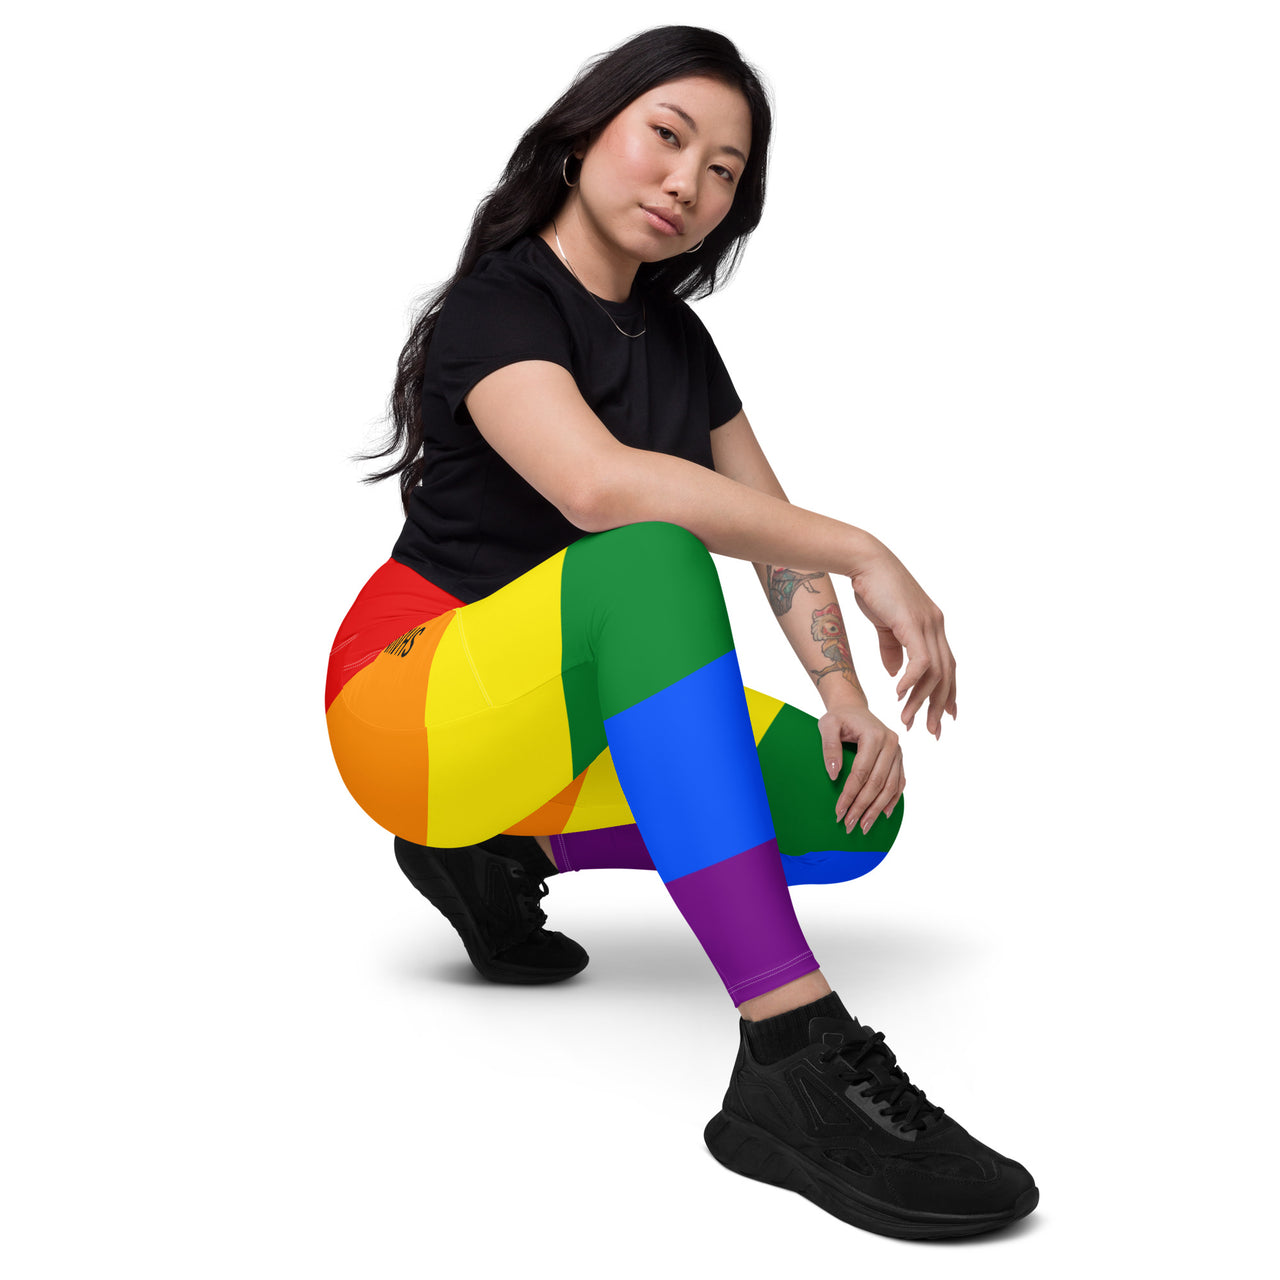 Celebrating Pride Flag LGBTQ Pockets Leggings Women’s Size SHAVA CO